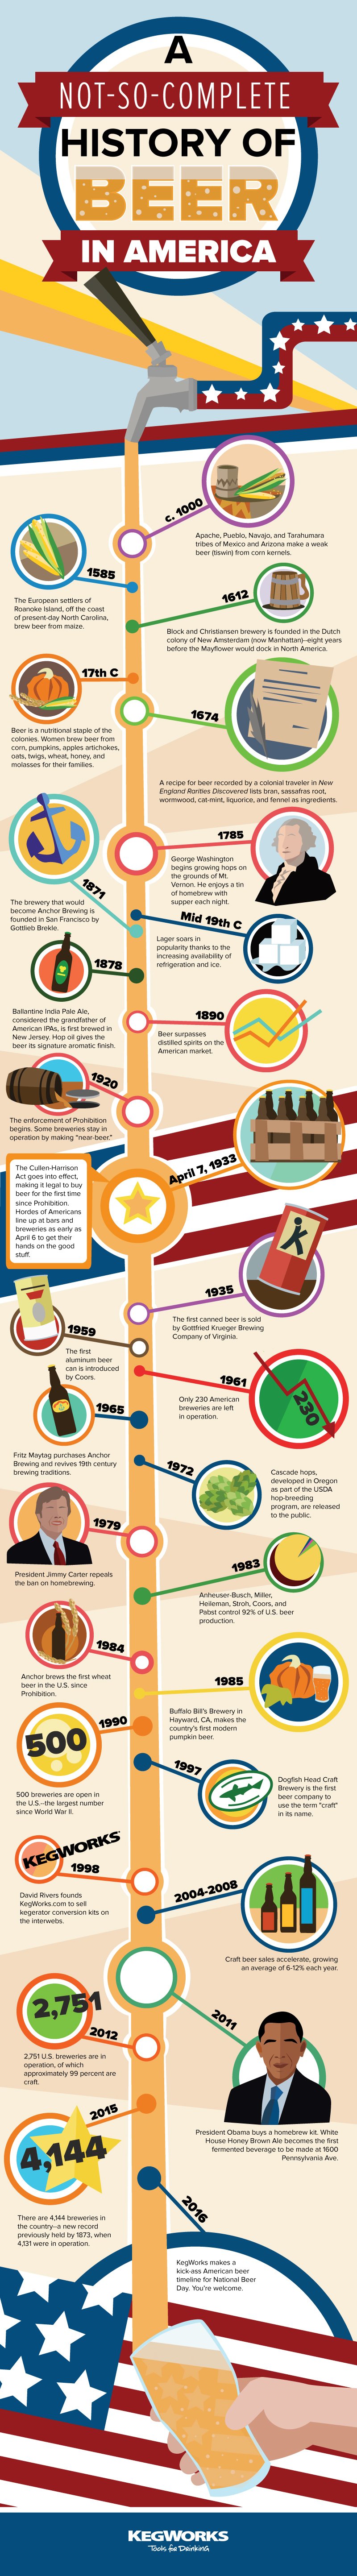 history of beer timeline